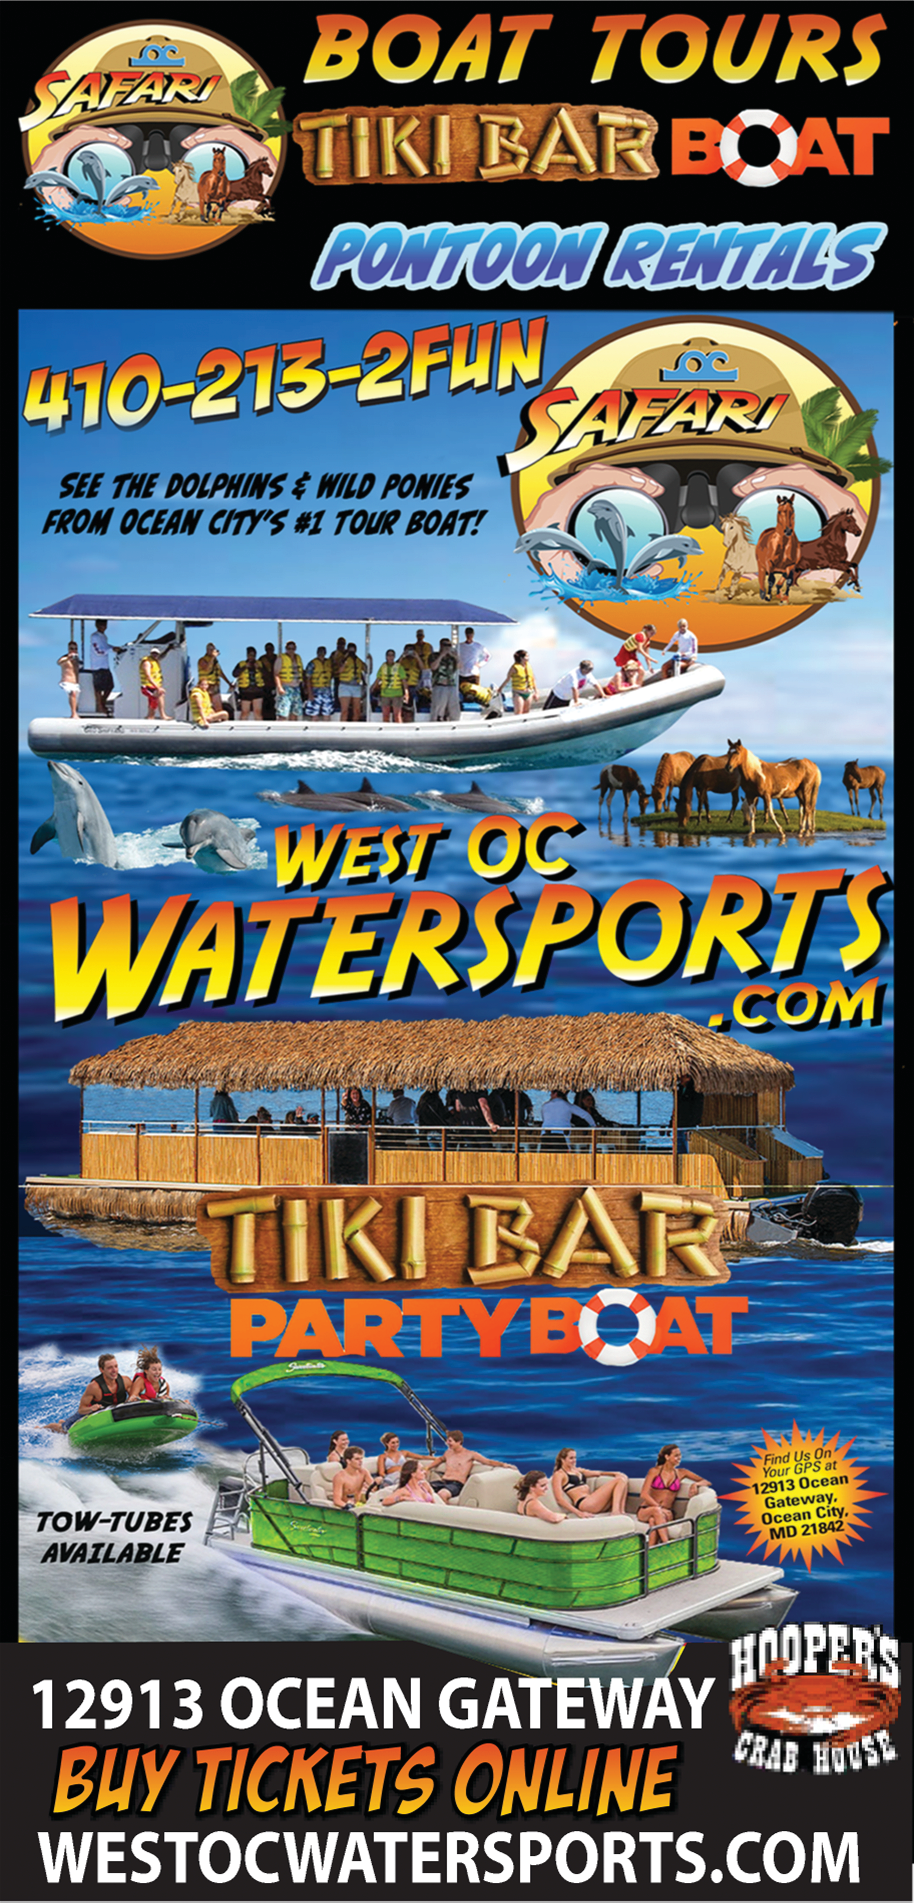 WEST OC WATERSPORTS Print Ad